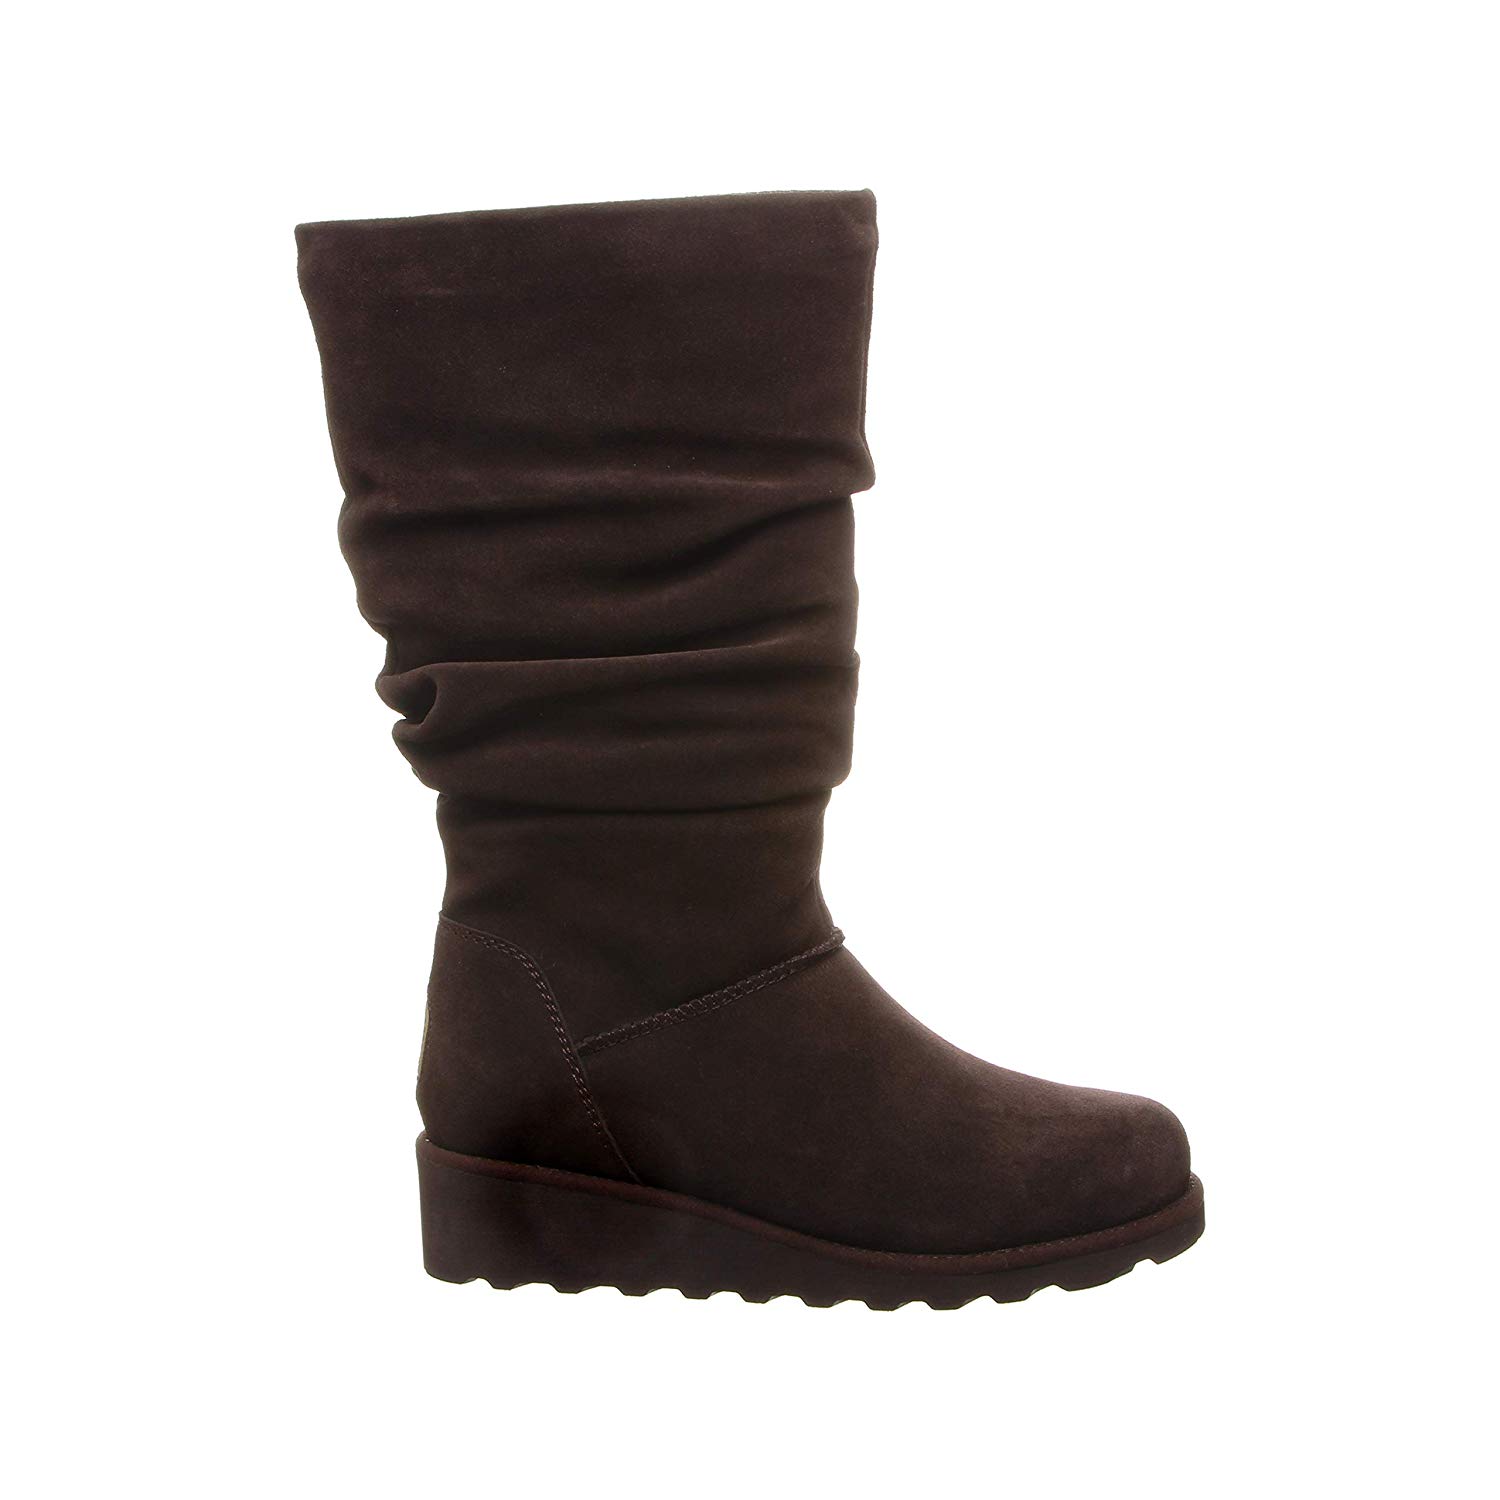 BEARPAW Women's Arianna Fashion Boot, Chocolate, Size 6.0 | eBay